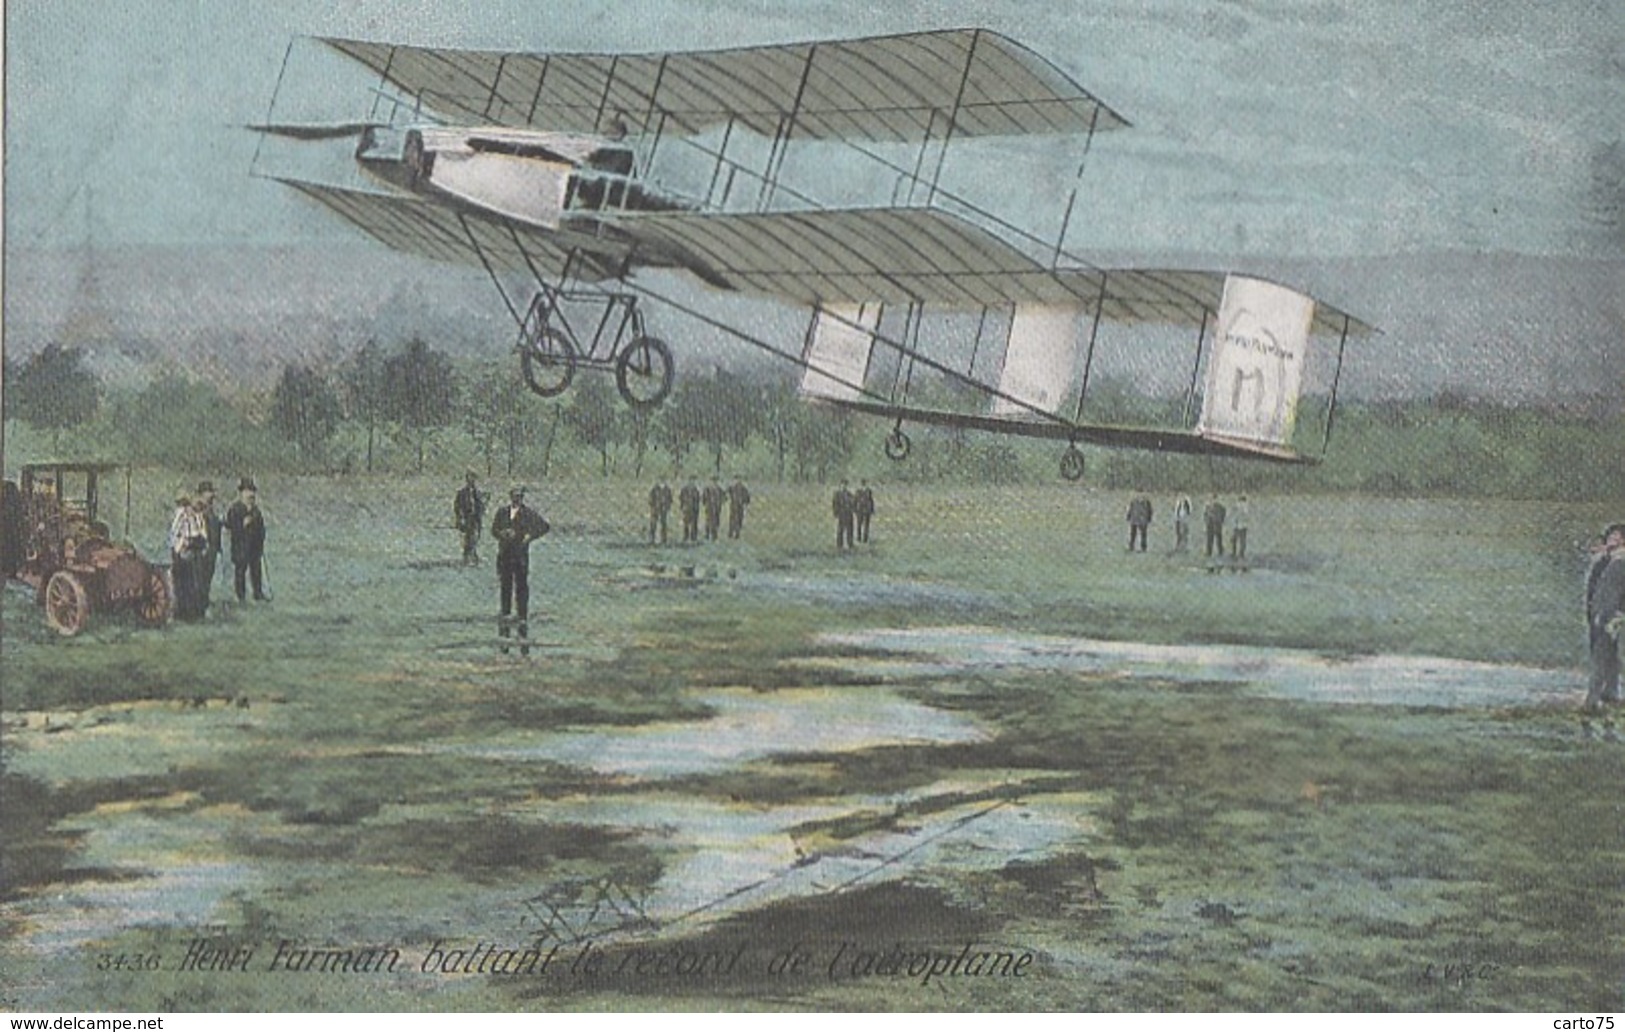 Aviation - Avion Biplan Farman - Record - ....-1914: Voorlopers